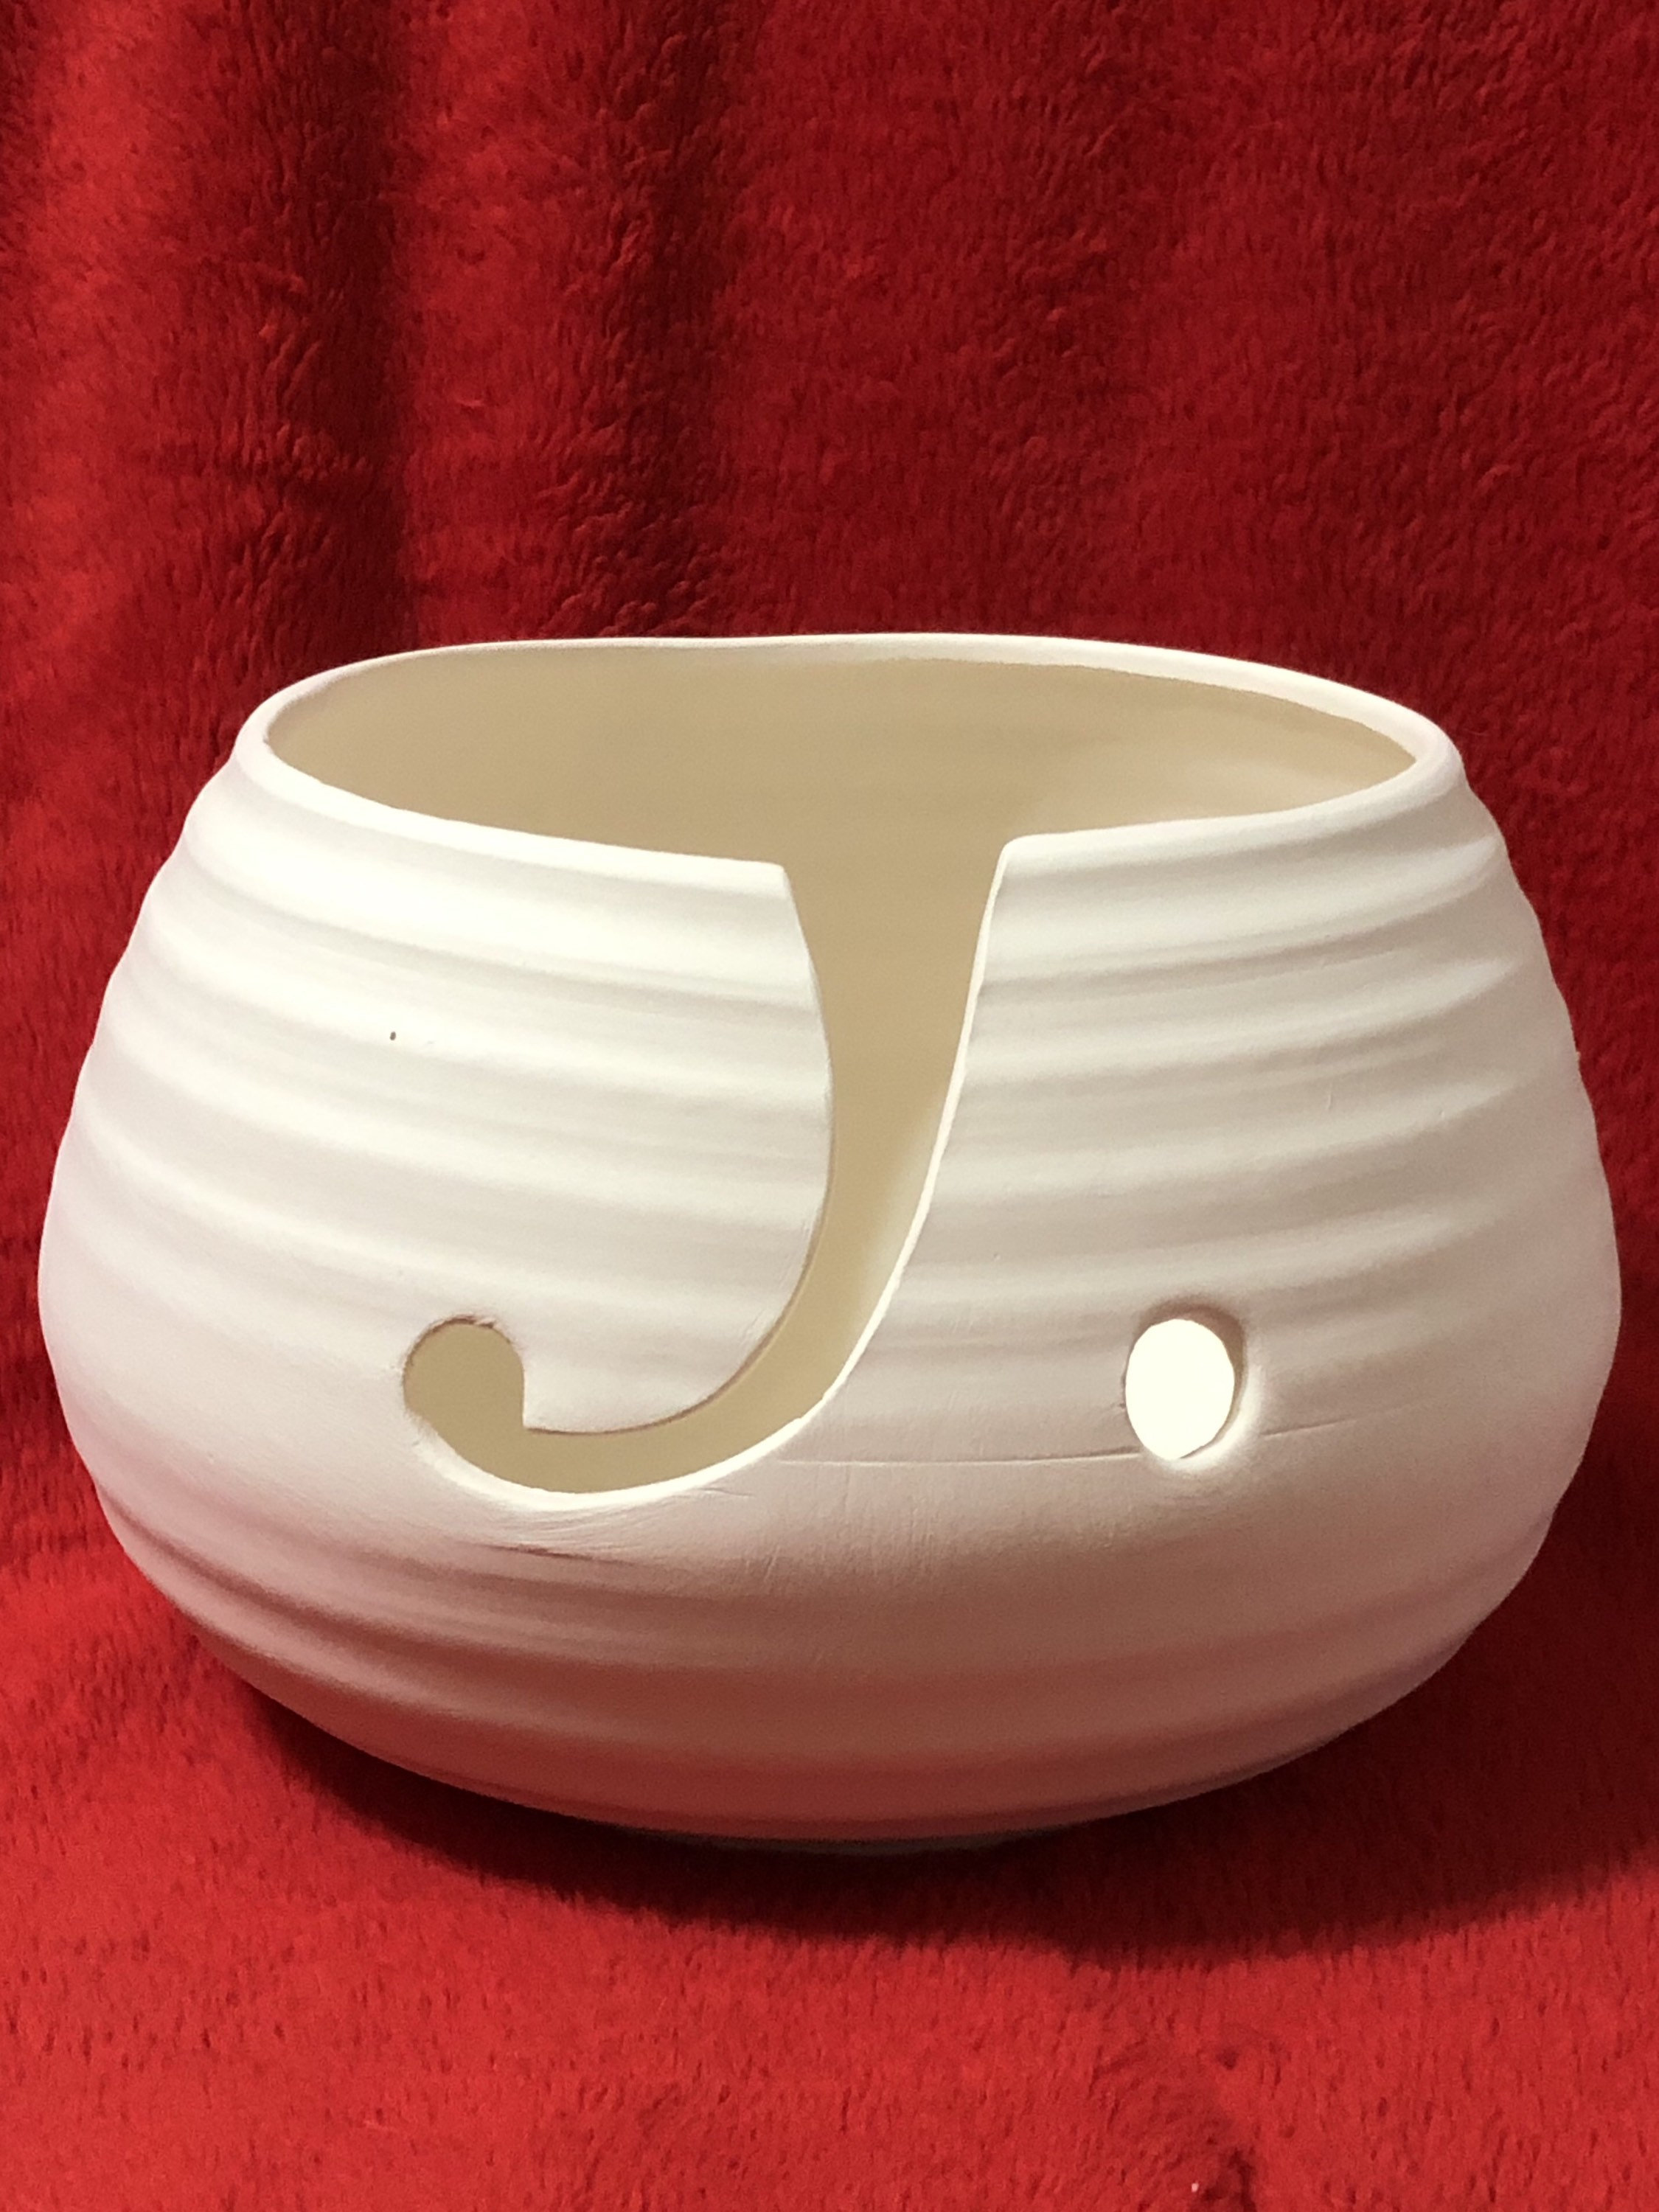 Pintar boles de cerámica DIY painted bowls